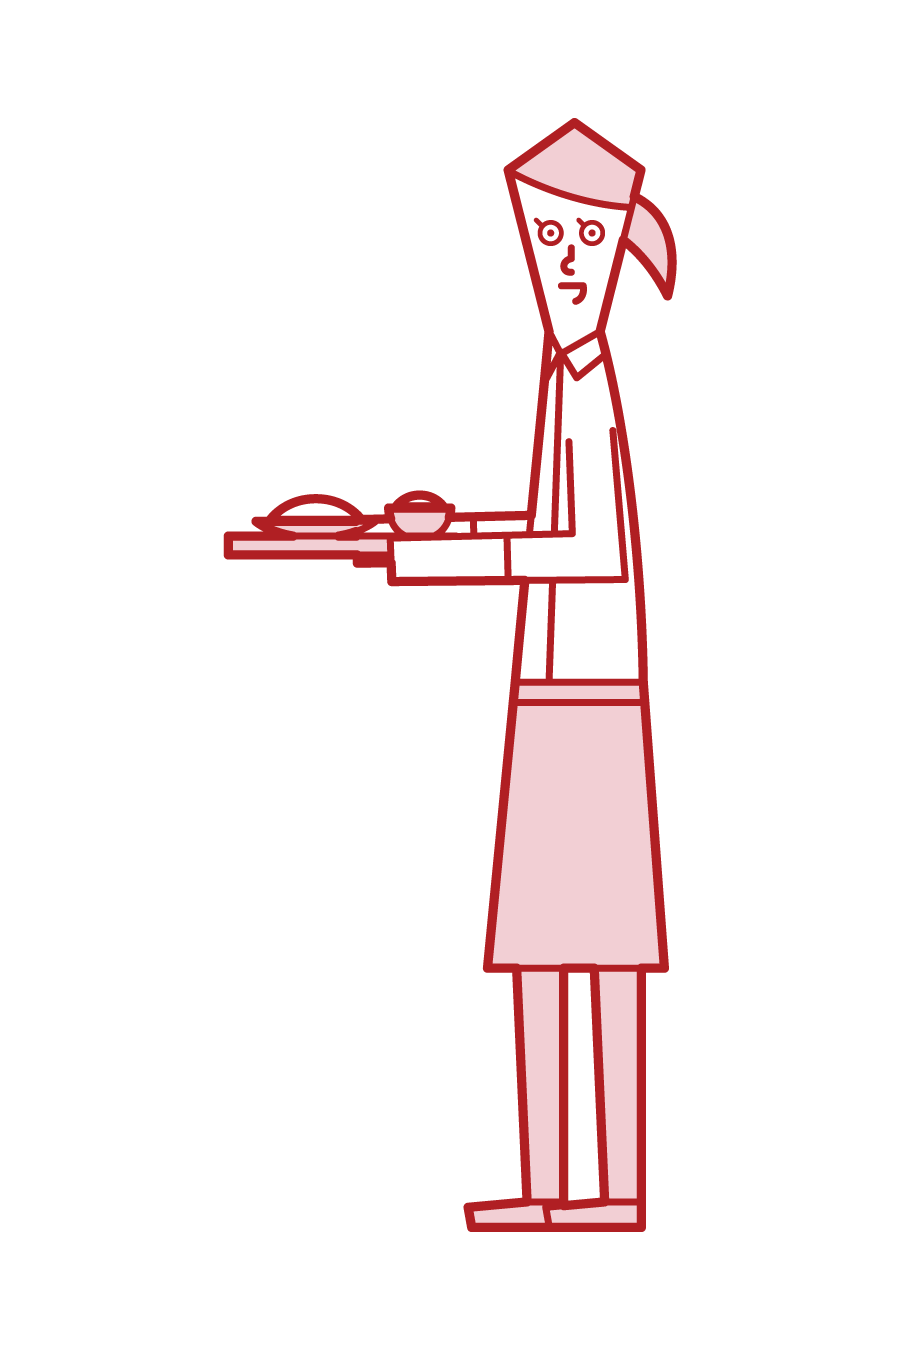 Illustration of a clerk (woman) at a restaurant or café